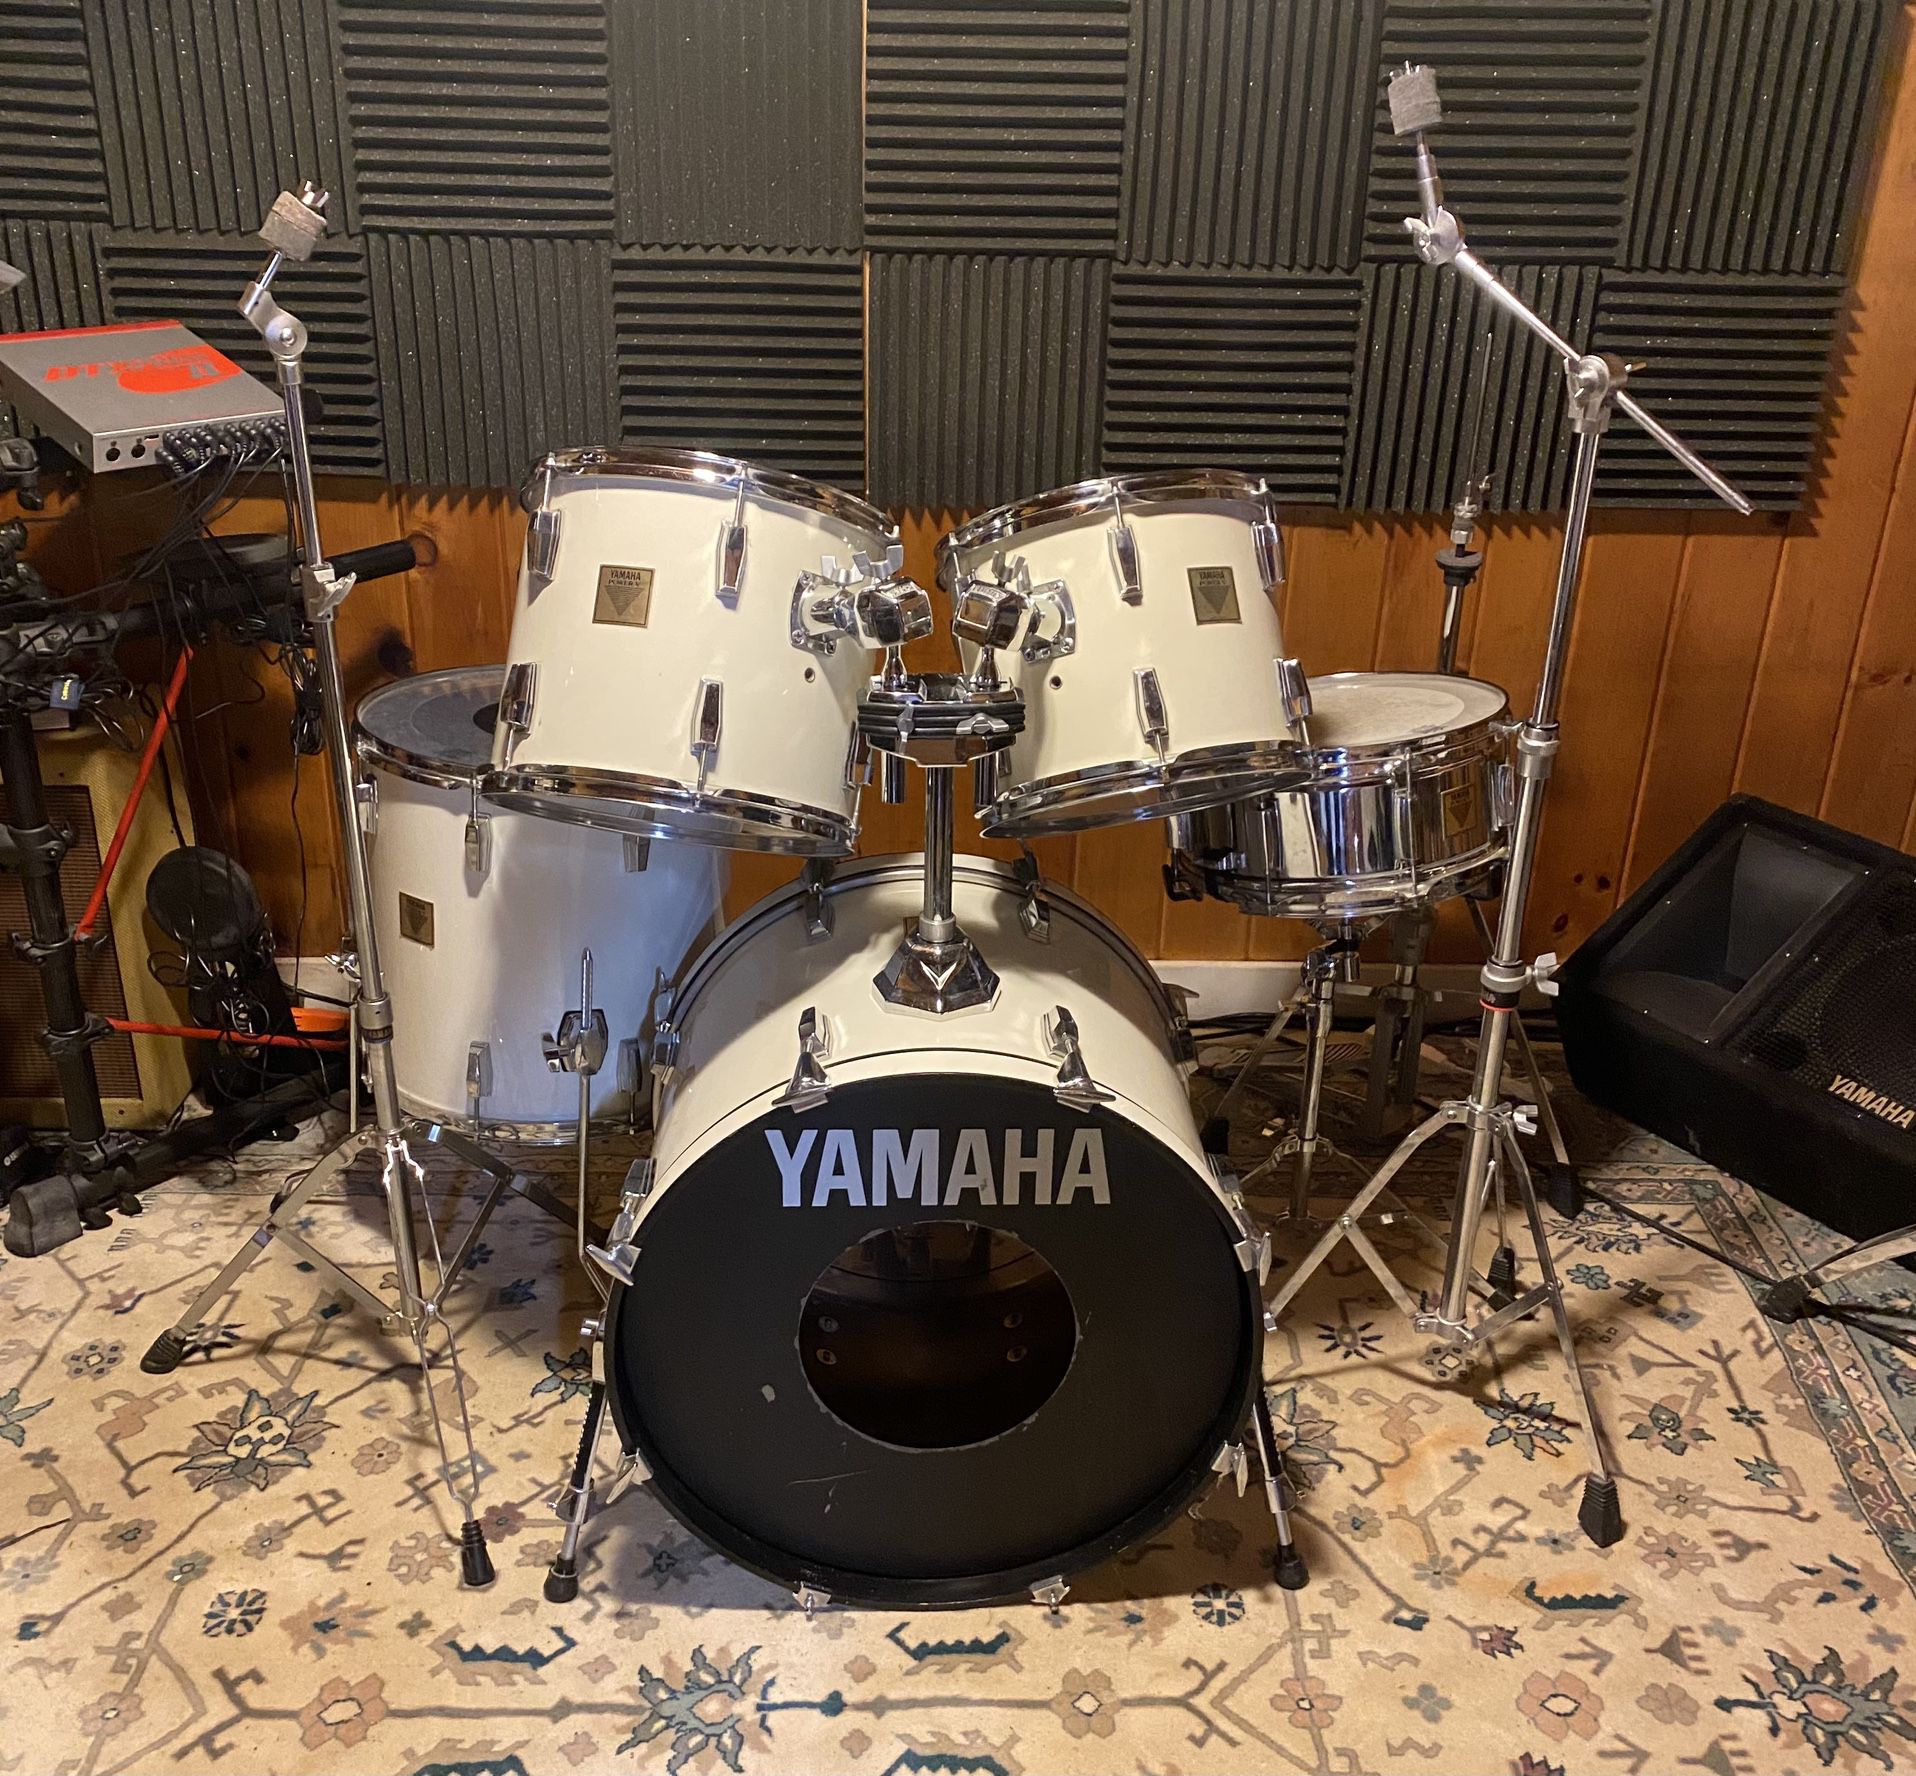 Vintage Yamaha Power V Drum Set SHELLS.  Matching Yamaha Hardware for sale also